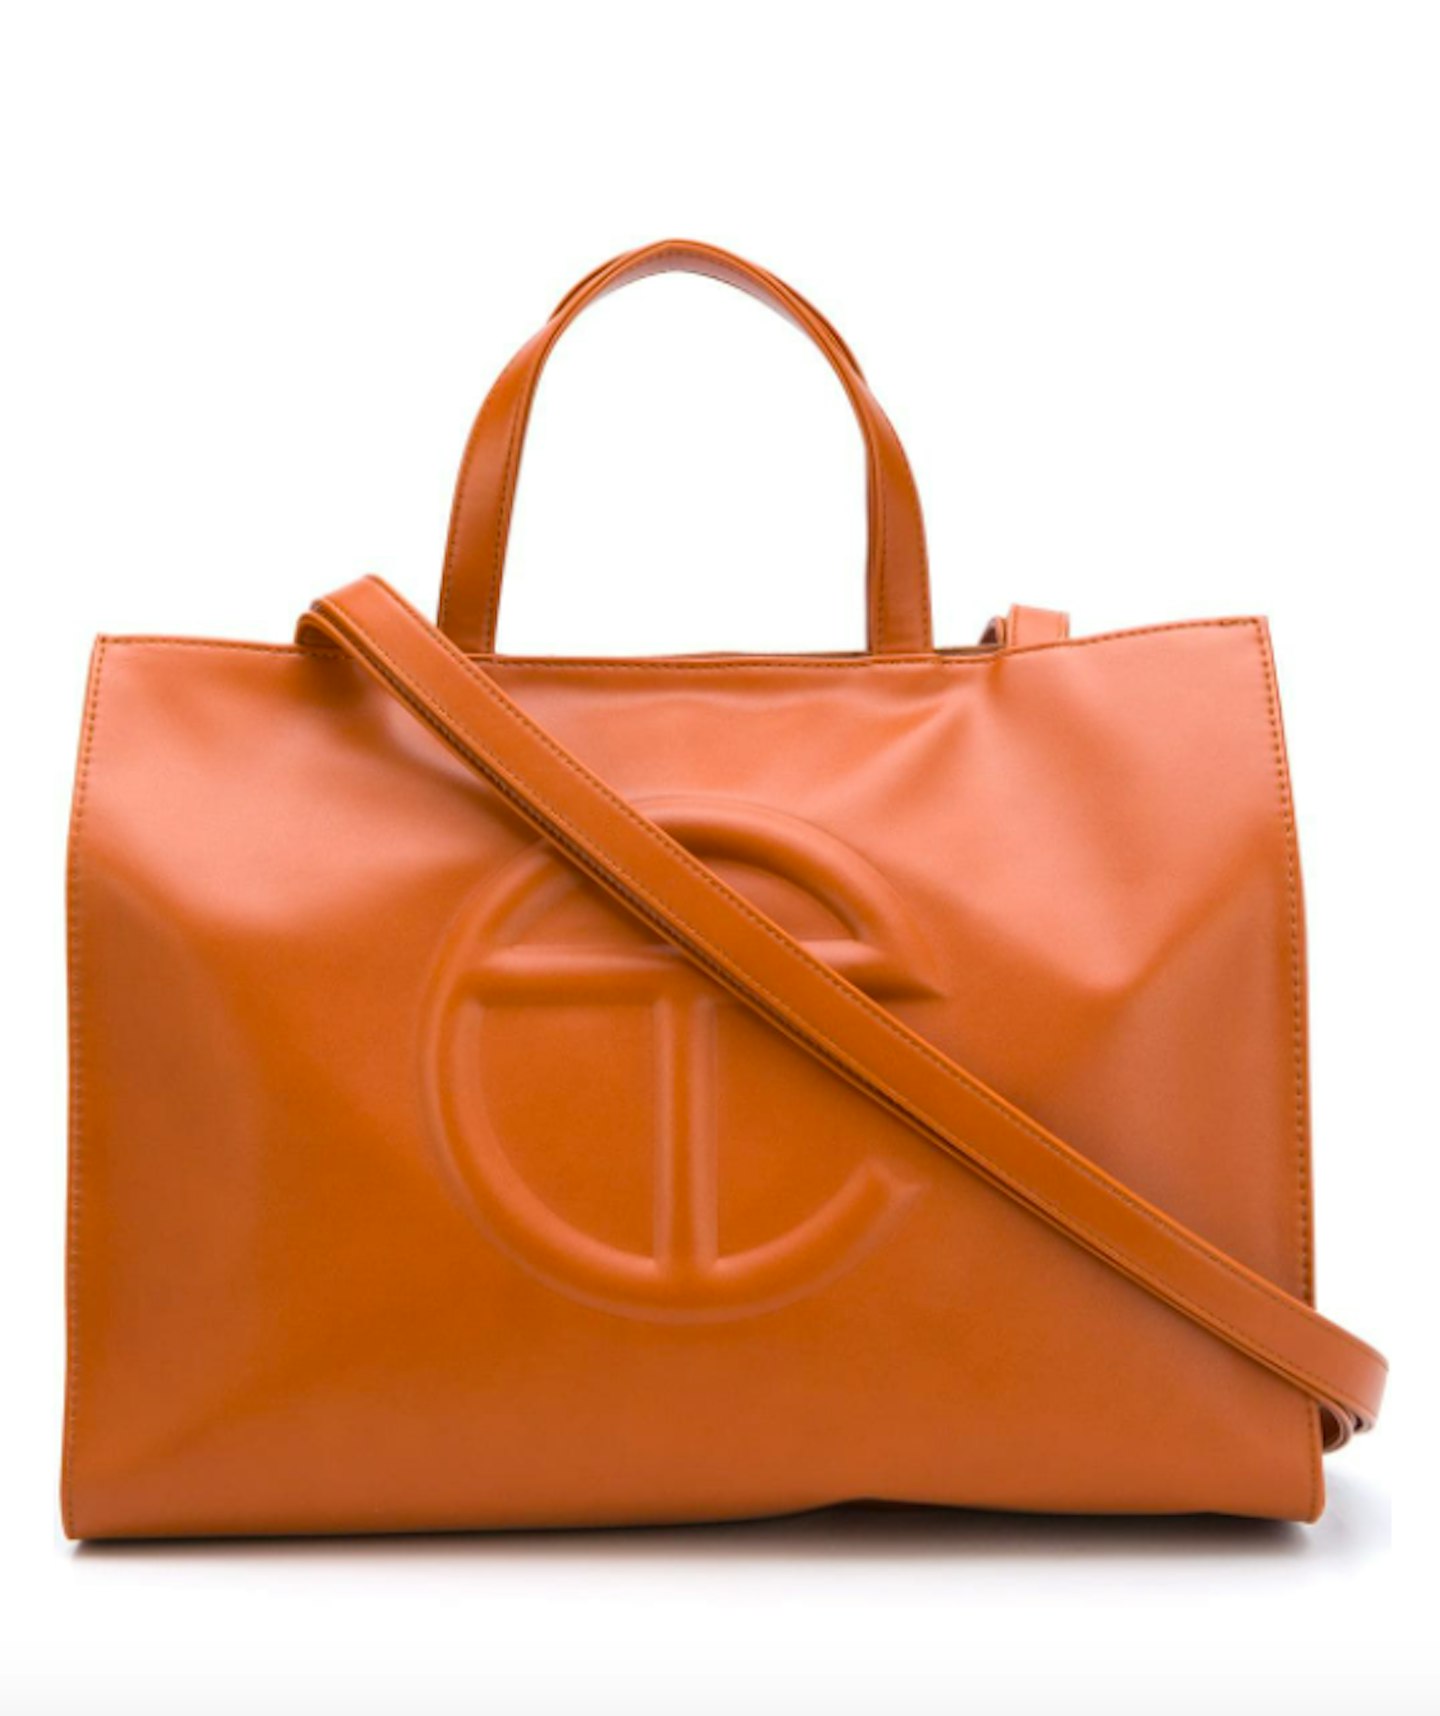 The Telfar Shopping Bag is finally back in stock on